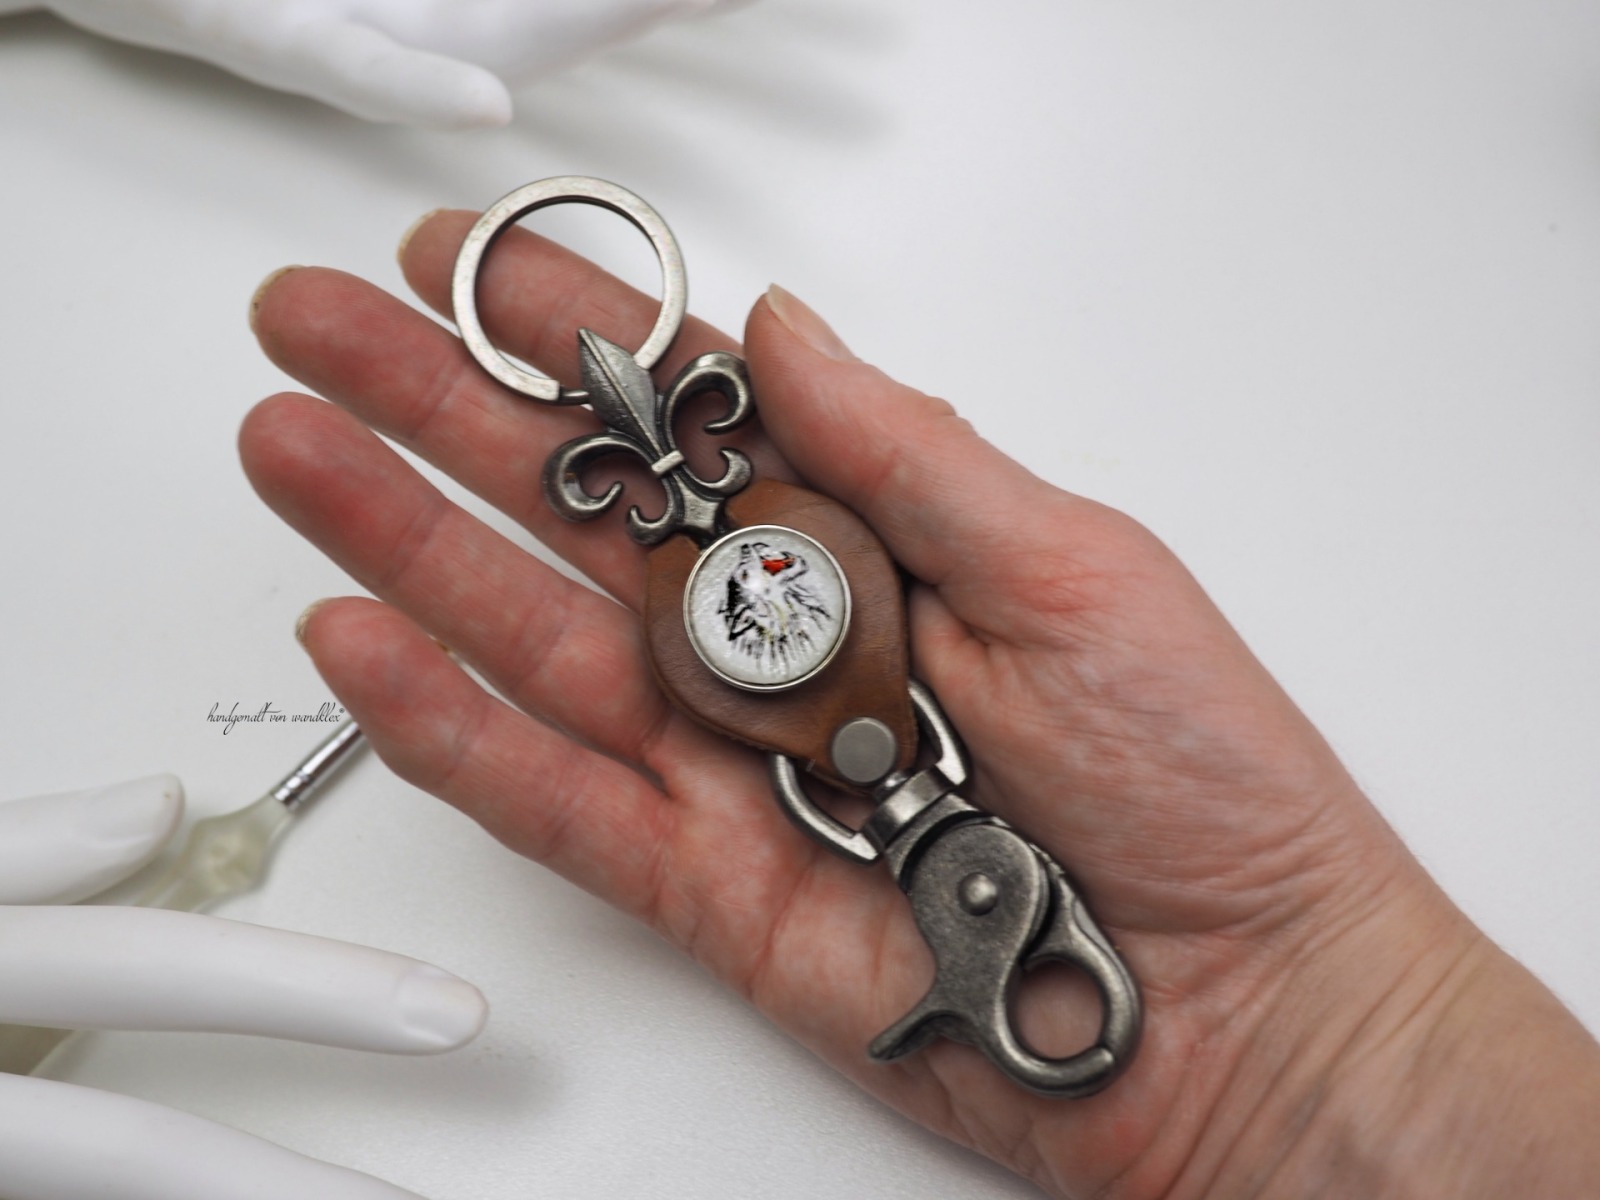 robuster großer Leder-Schlüsselanhänger mit wählbarem handgemaltem Druckknopfmotiv